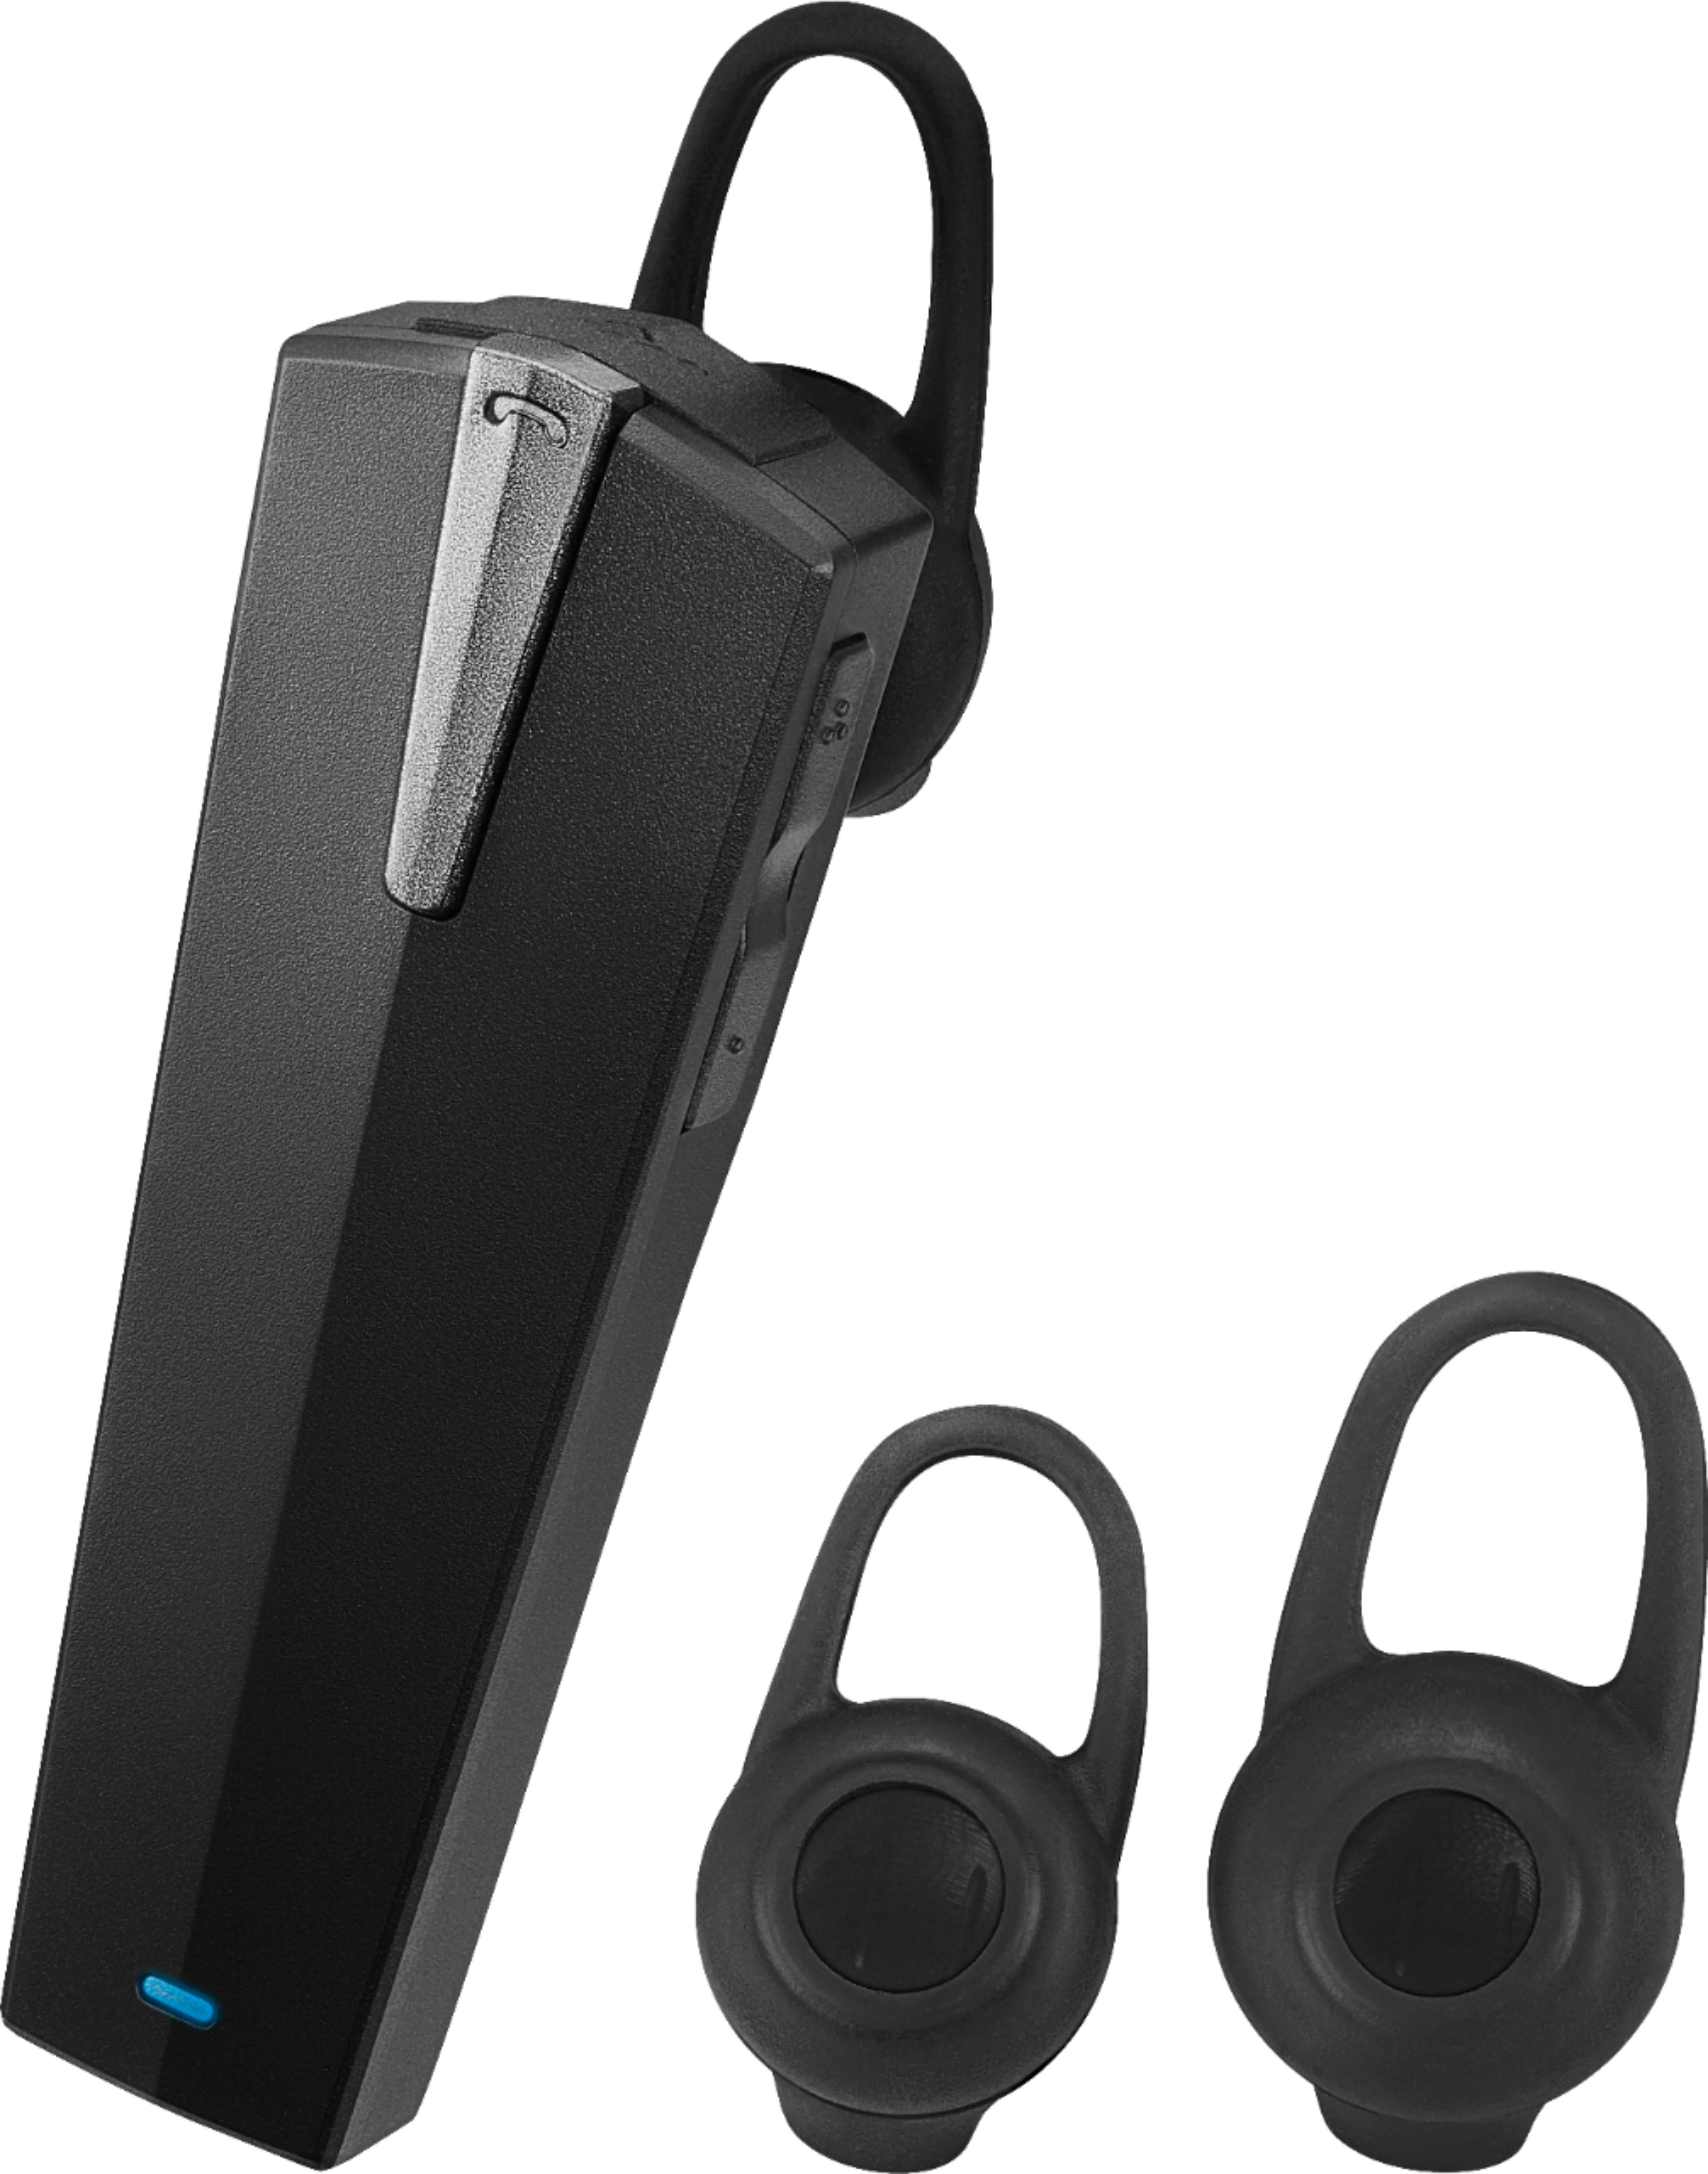 Angle View: BlueParrott - Bluetooth Headset - Black